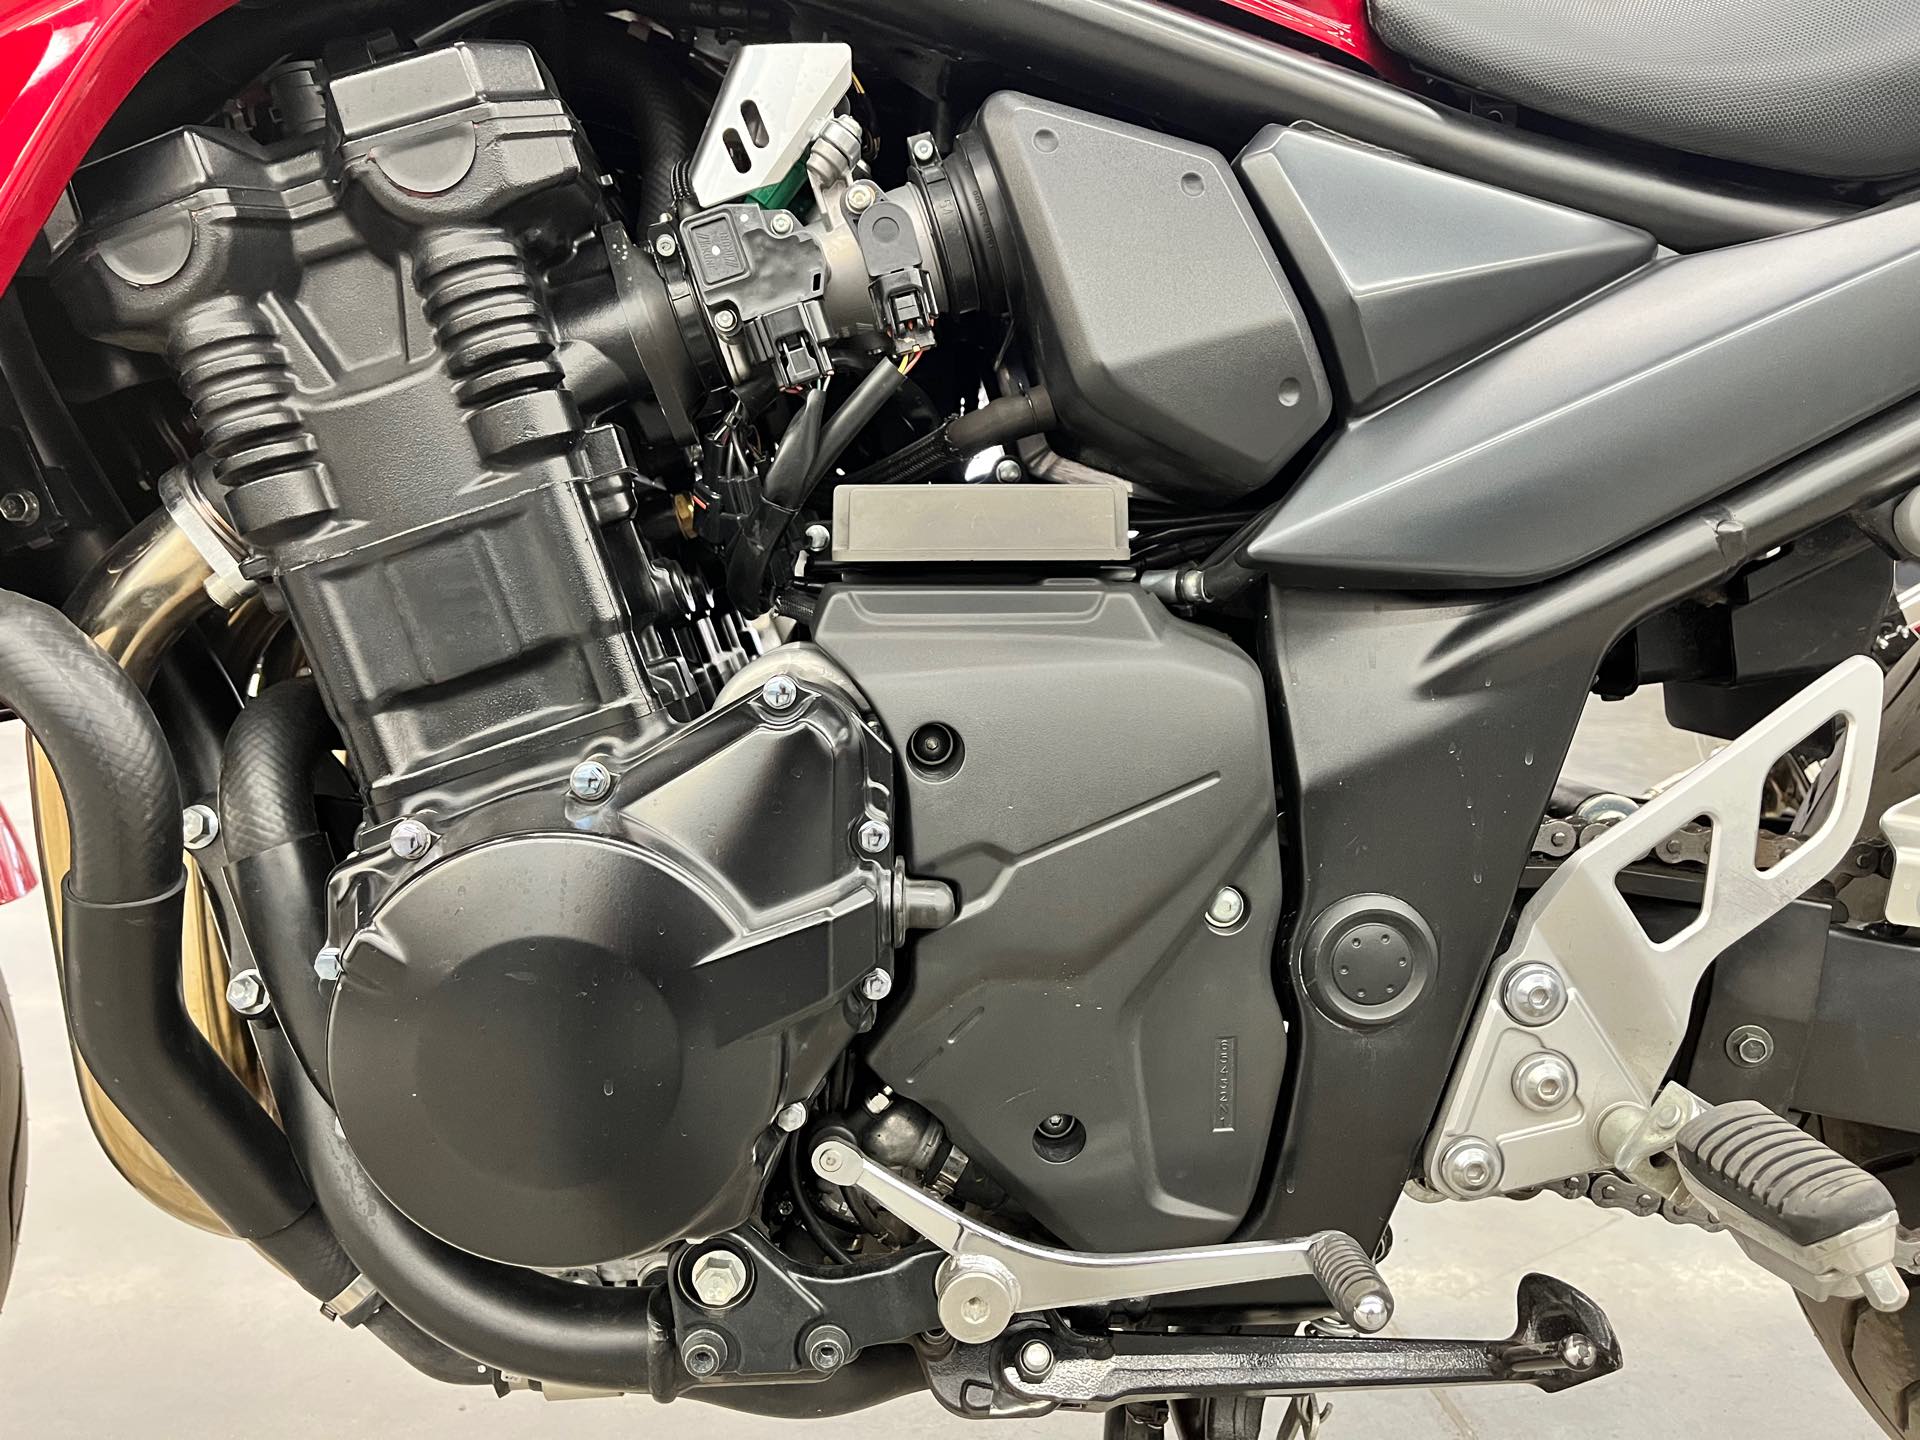 2016 Suzuki Bandit 1250S ABS at Aces Motorcycles - Denver